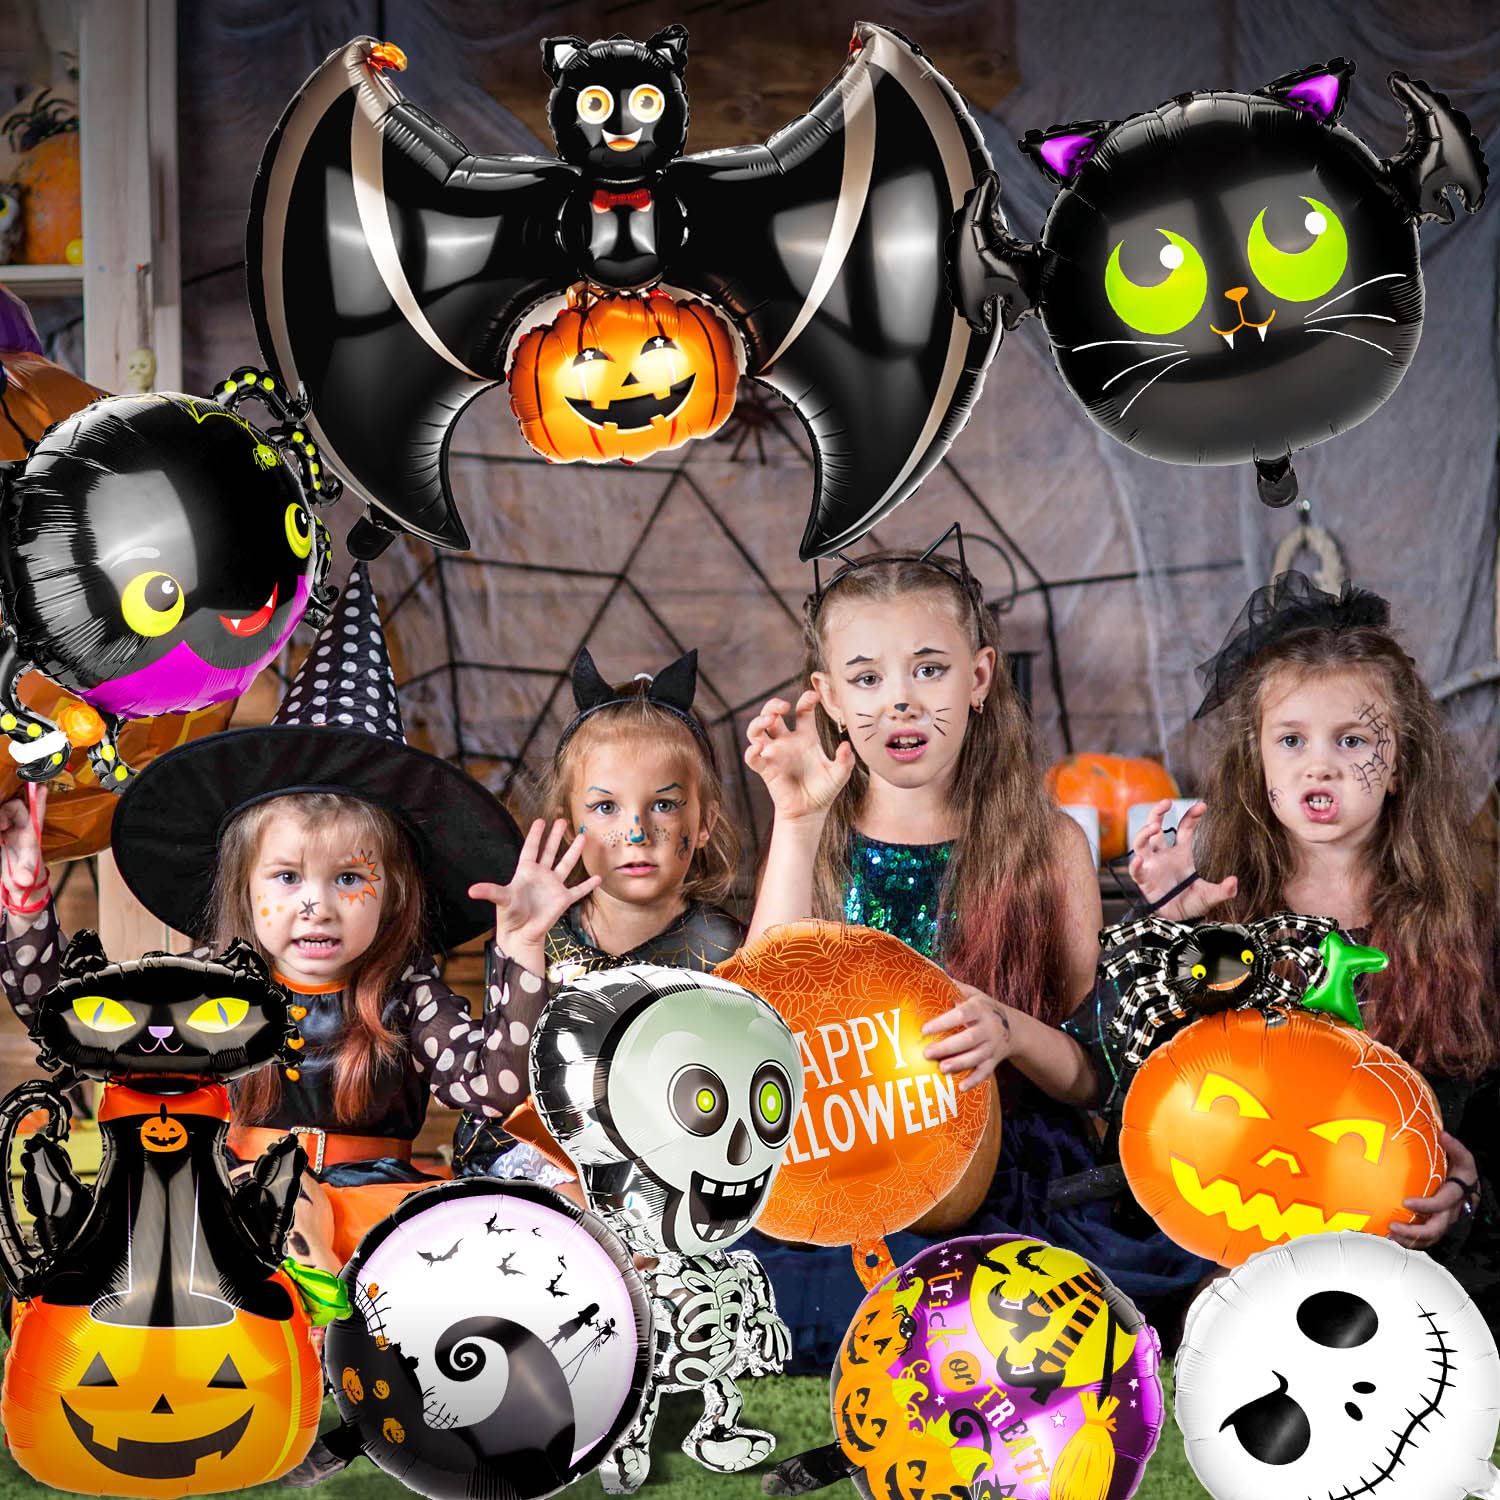 20 Pcs Halloween Balloons, Large 30IN Bat, Pumpkin, Spider, Skeleton Skull, Star Shape Mylar Balloon, Black & Orange & Purple Helium Foil Balloon for Party Decorations